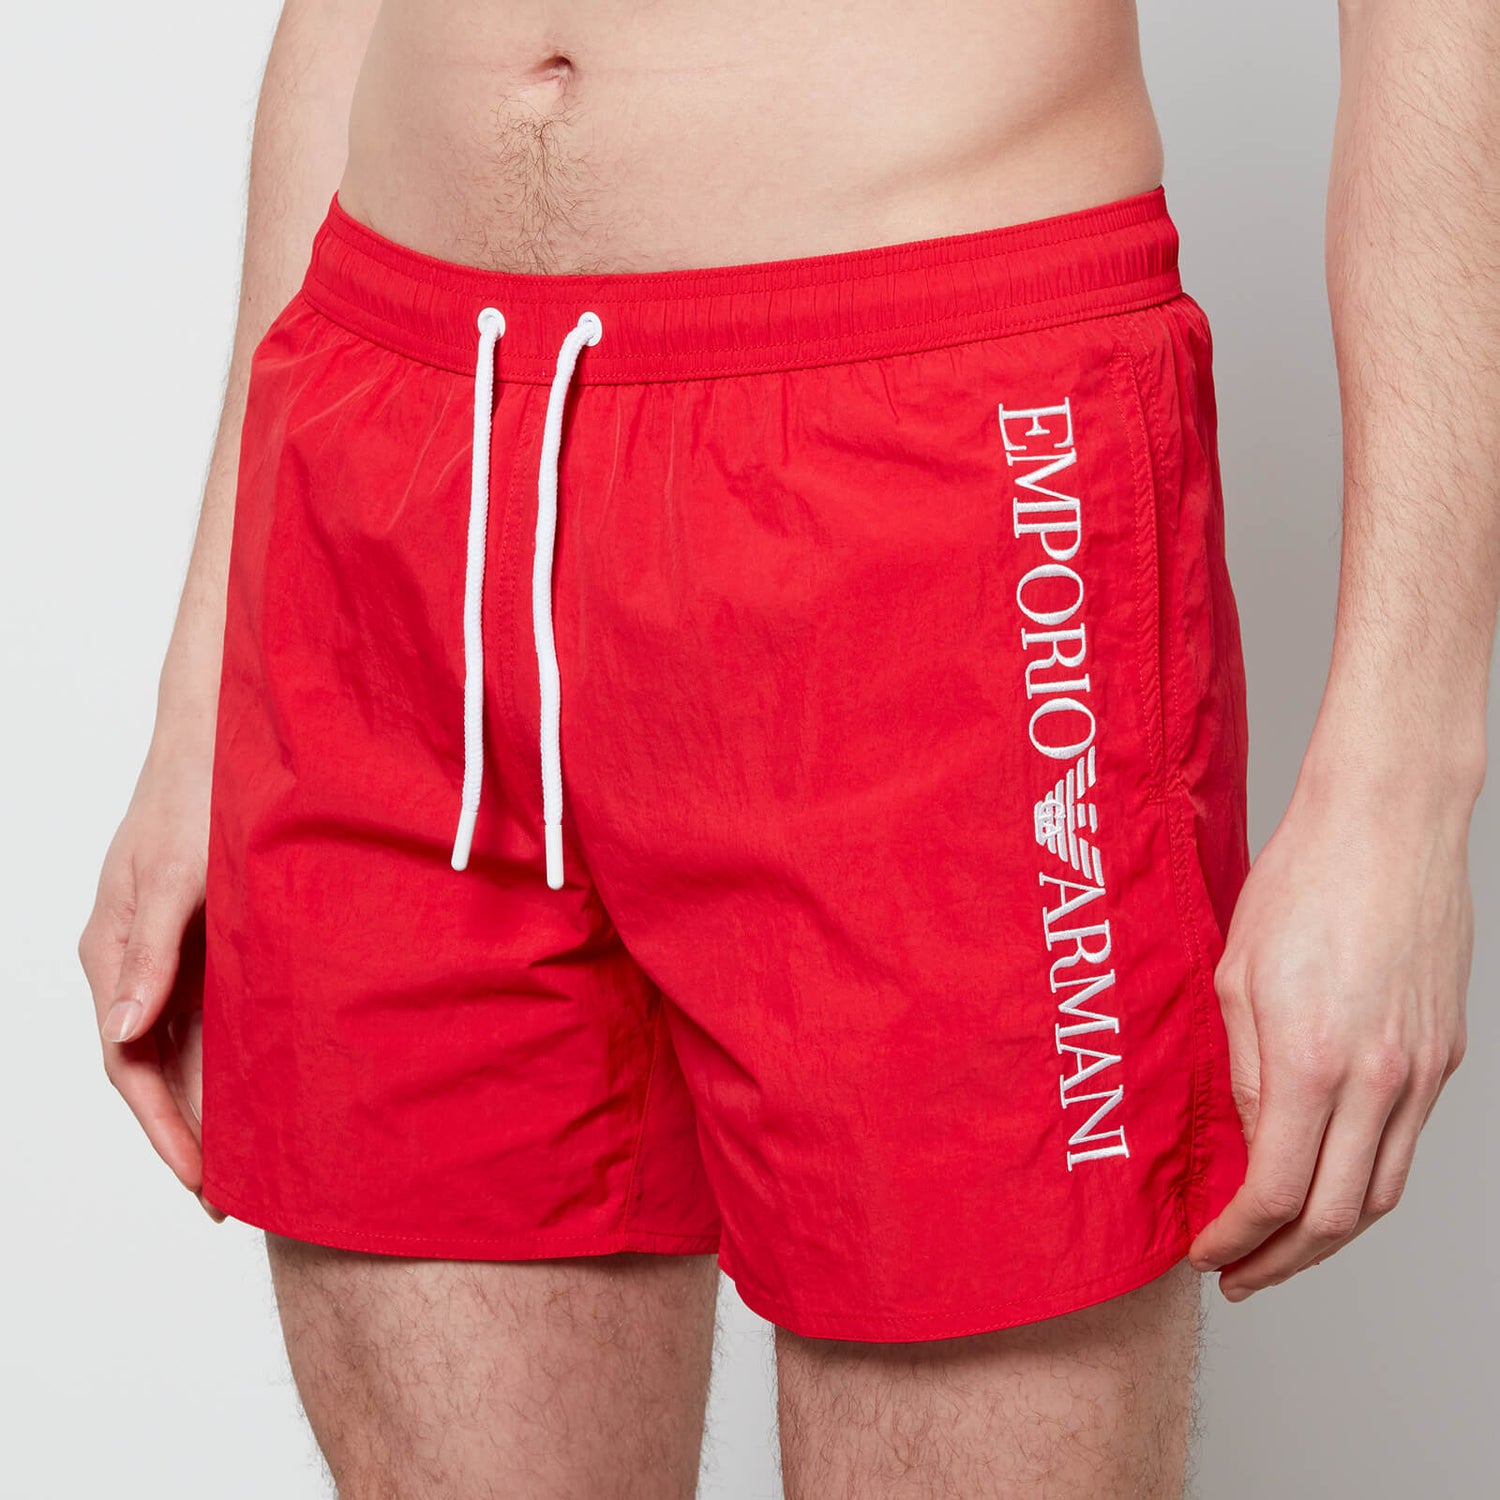 Emporio Armani Men's Embroidered Logo Swim Shorts - Ruby Red - IT 48/M